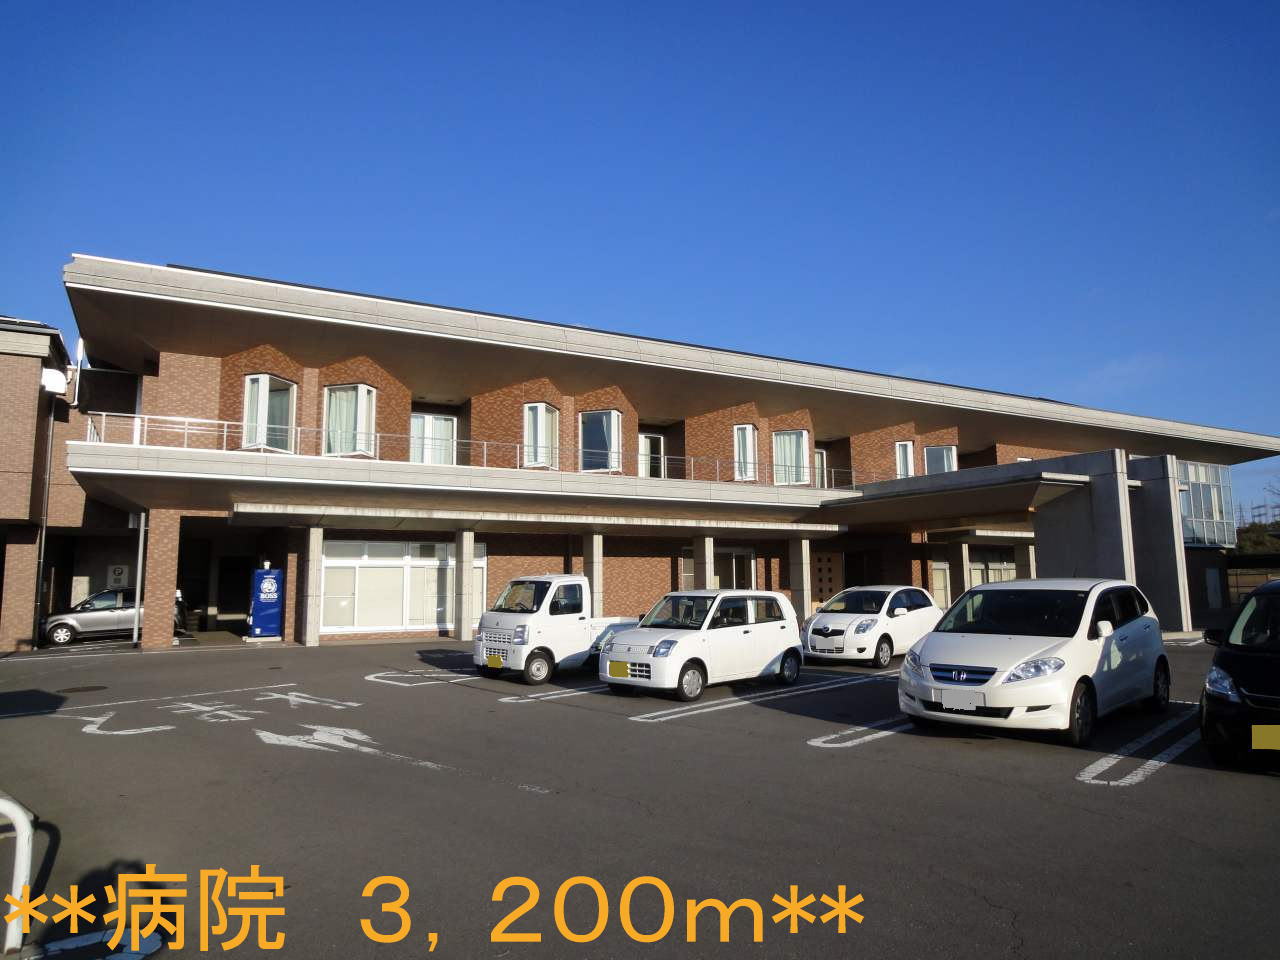 Hospital. Tomi City Hospital (hospital) to 3200m